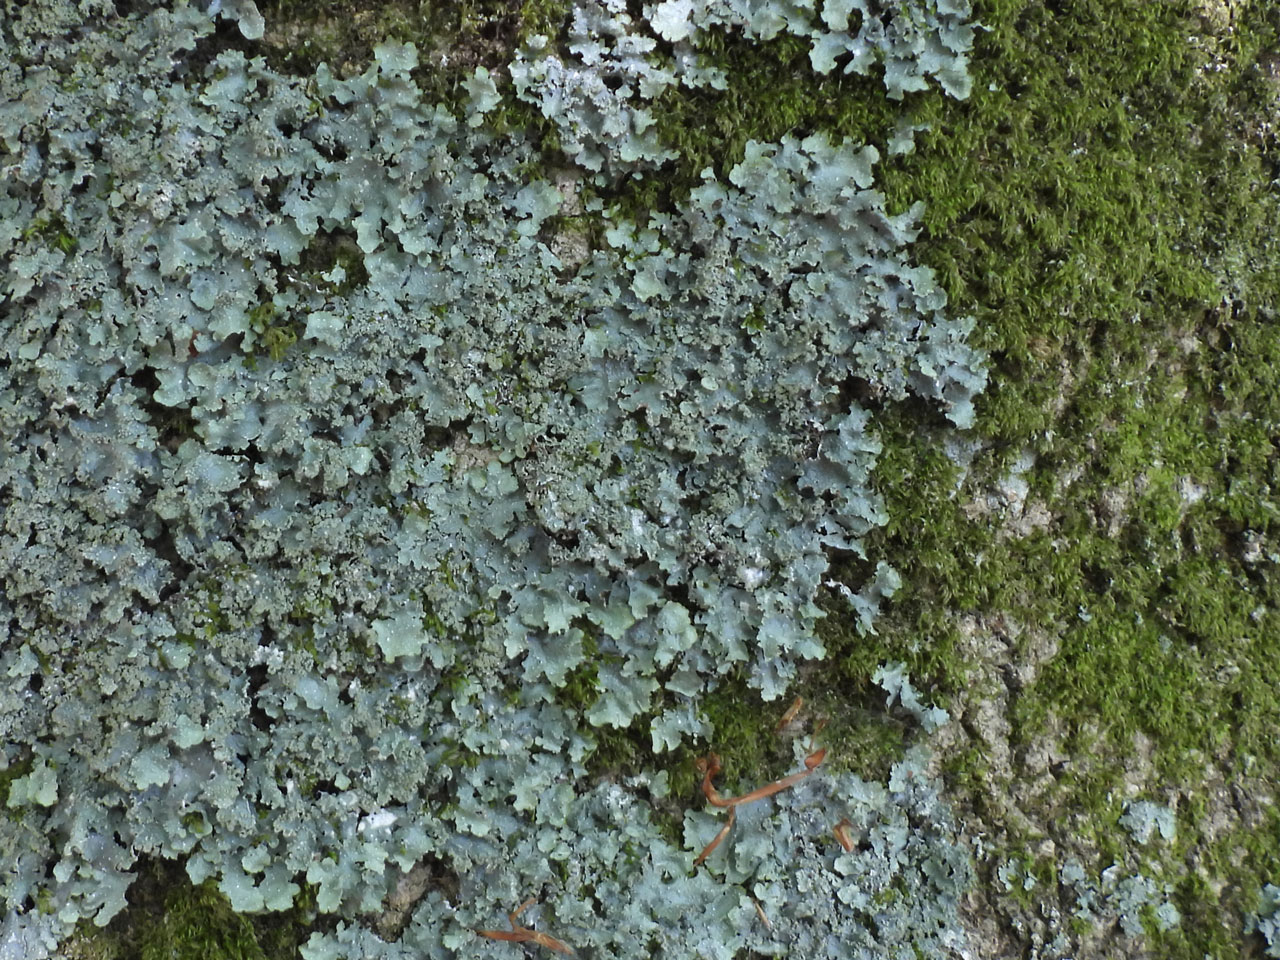 Punctelia reddenda, Beech, King's Hat, Hollands Wood, New Forest